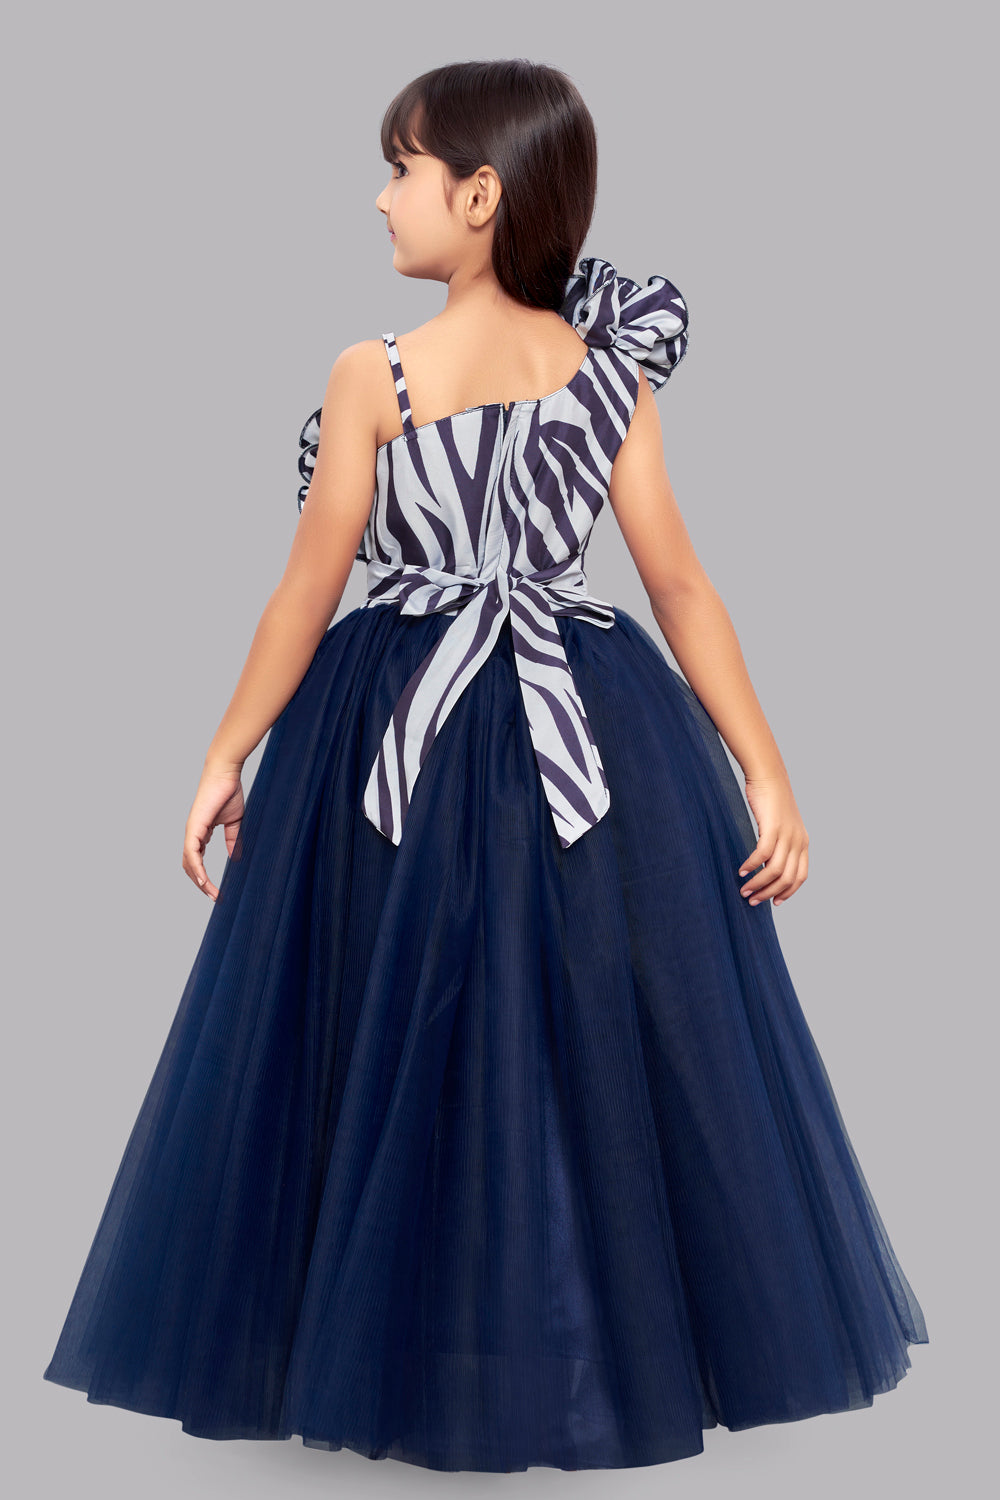 Buy Navy Blue Evening Dress, Elegant Prom Gown, Tulle Maxi Dress, Long  Sleeve Dress, Alternative Wedding Dress Online in India - Etsy